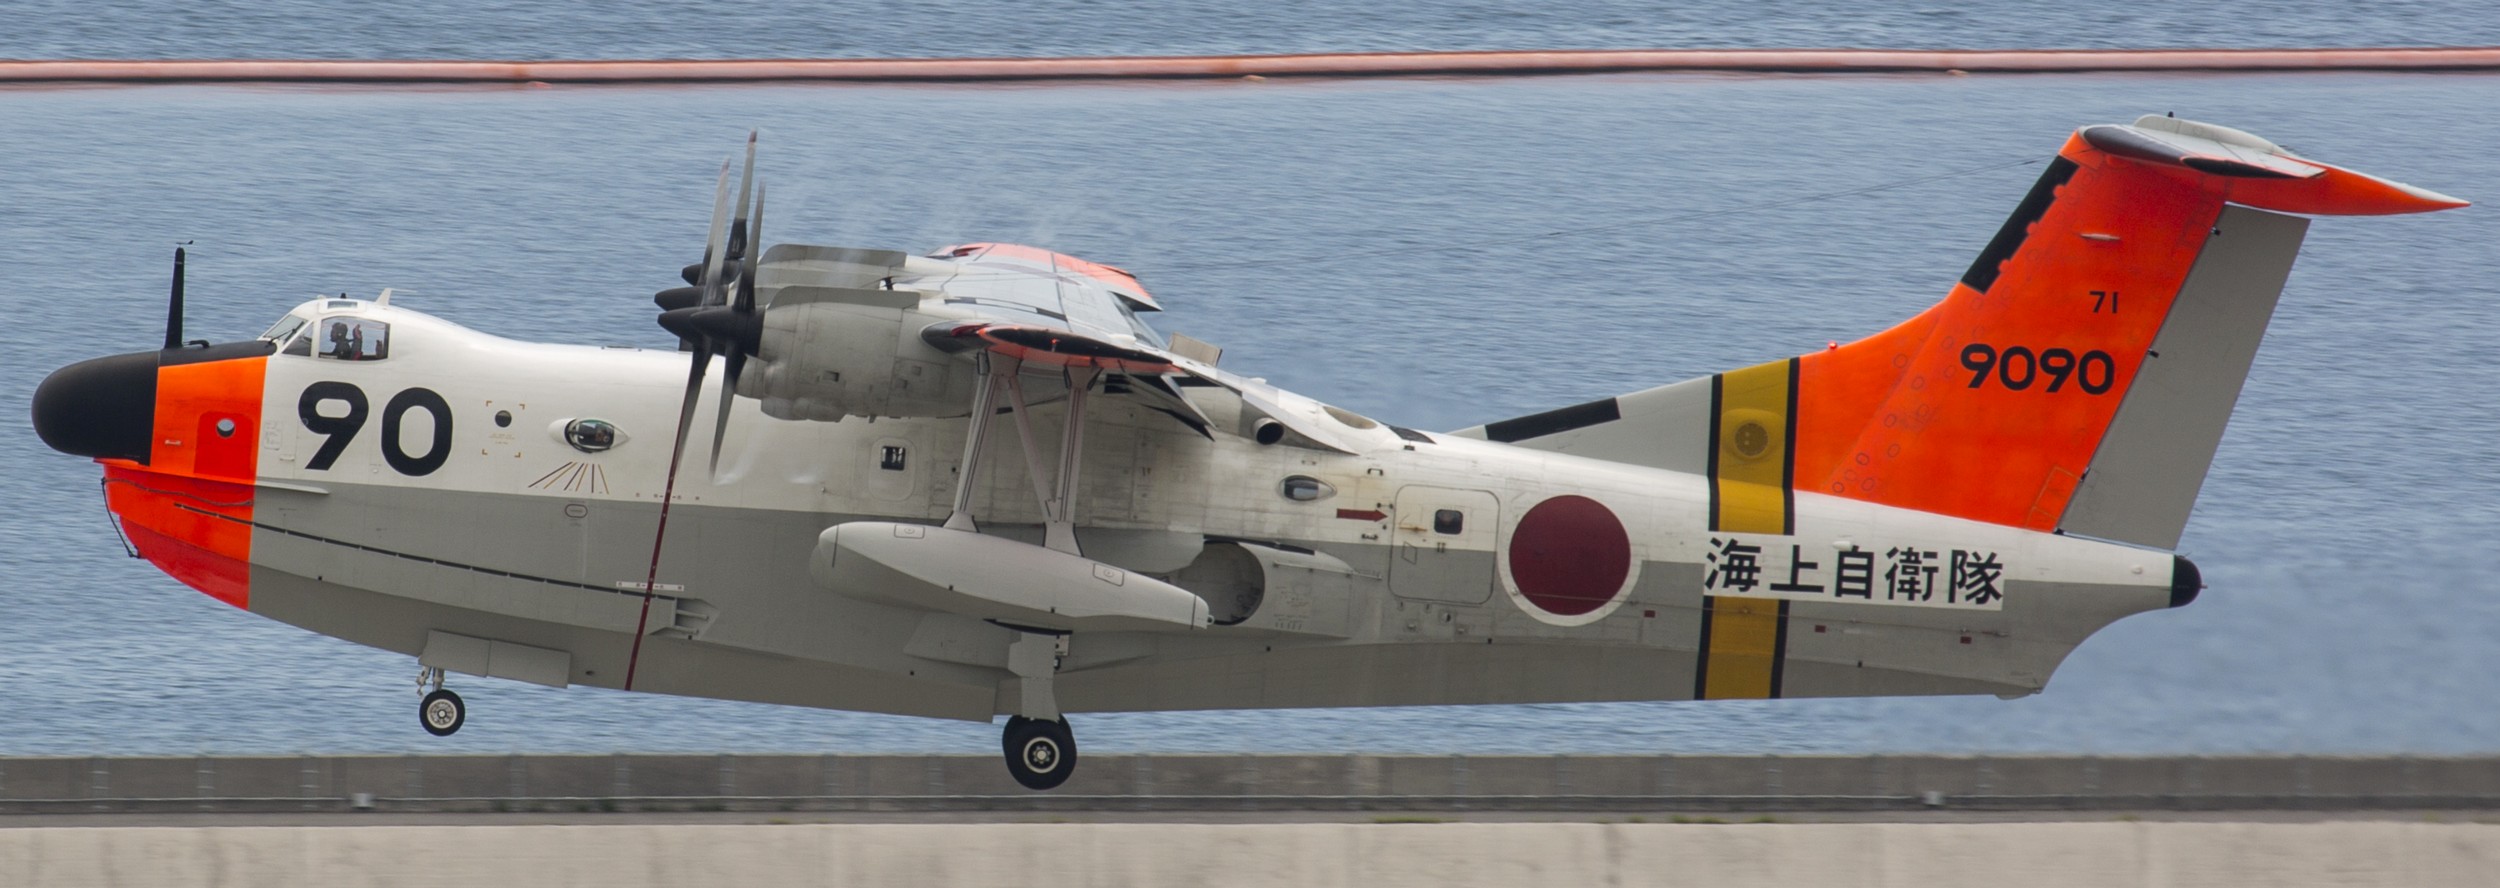 shin meiwa us-1a flying boat japan maritime self defense force jmsdf sar 71 squadron atsugi 9090 03